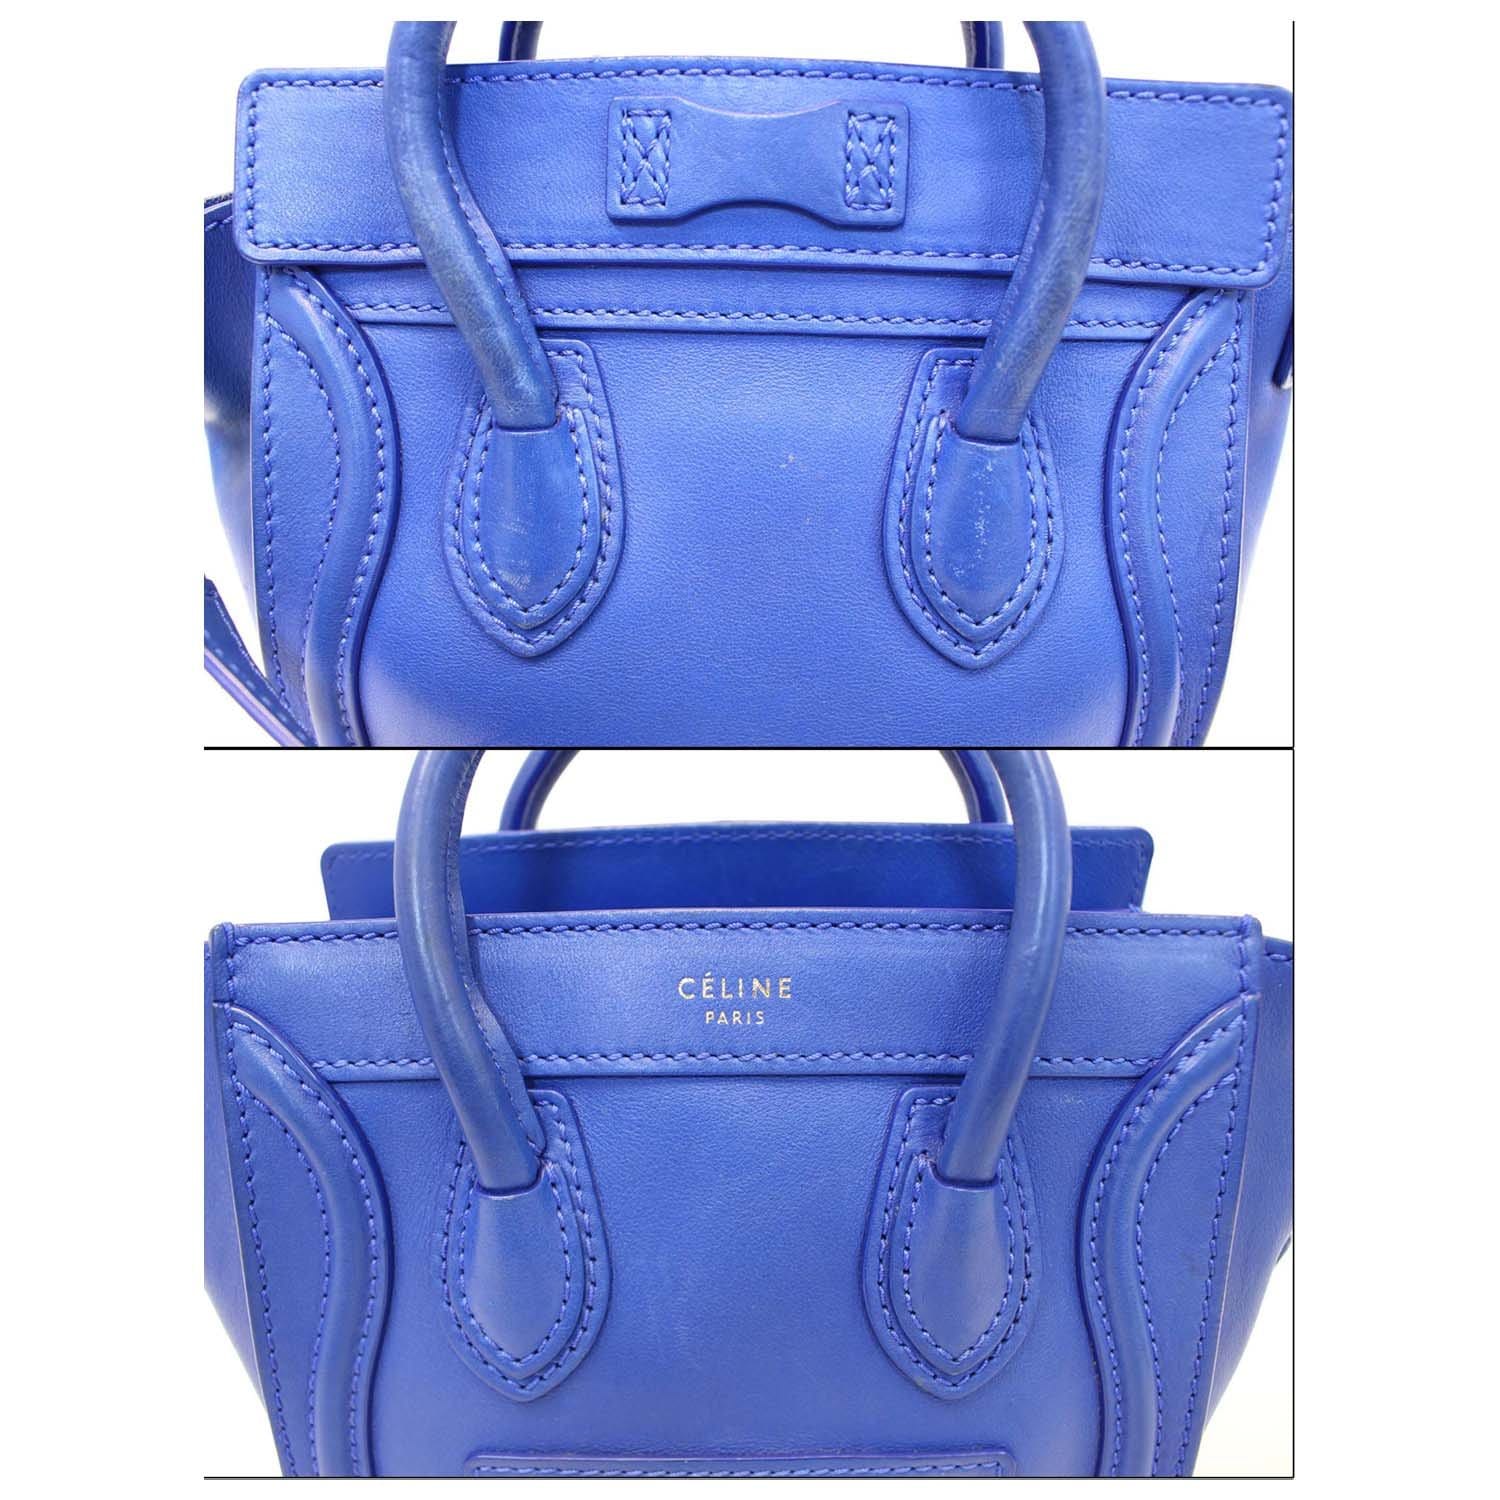 Céline NEW CELINE BUCKET BIG BAG SMALL BLUE LEATHER + HAND BAG